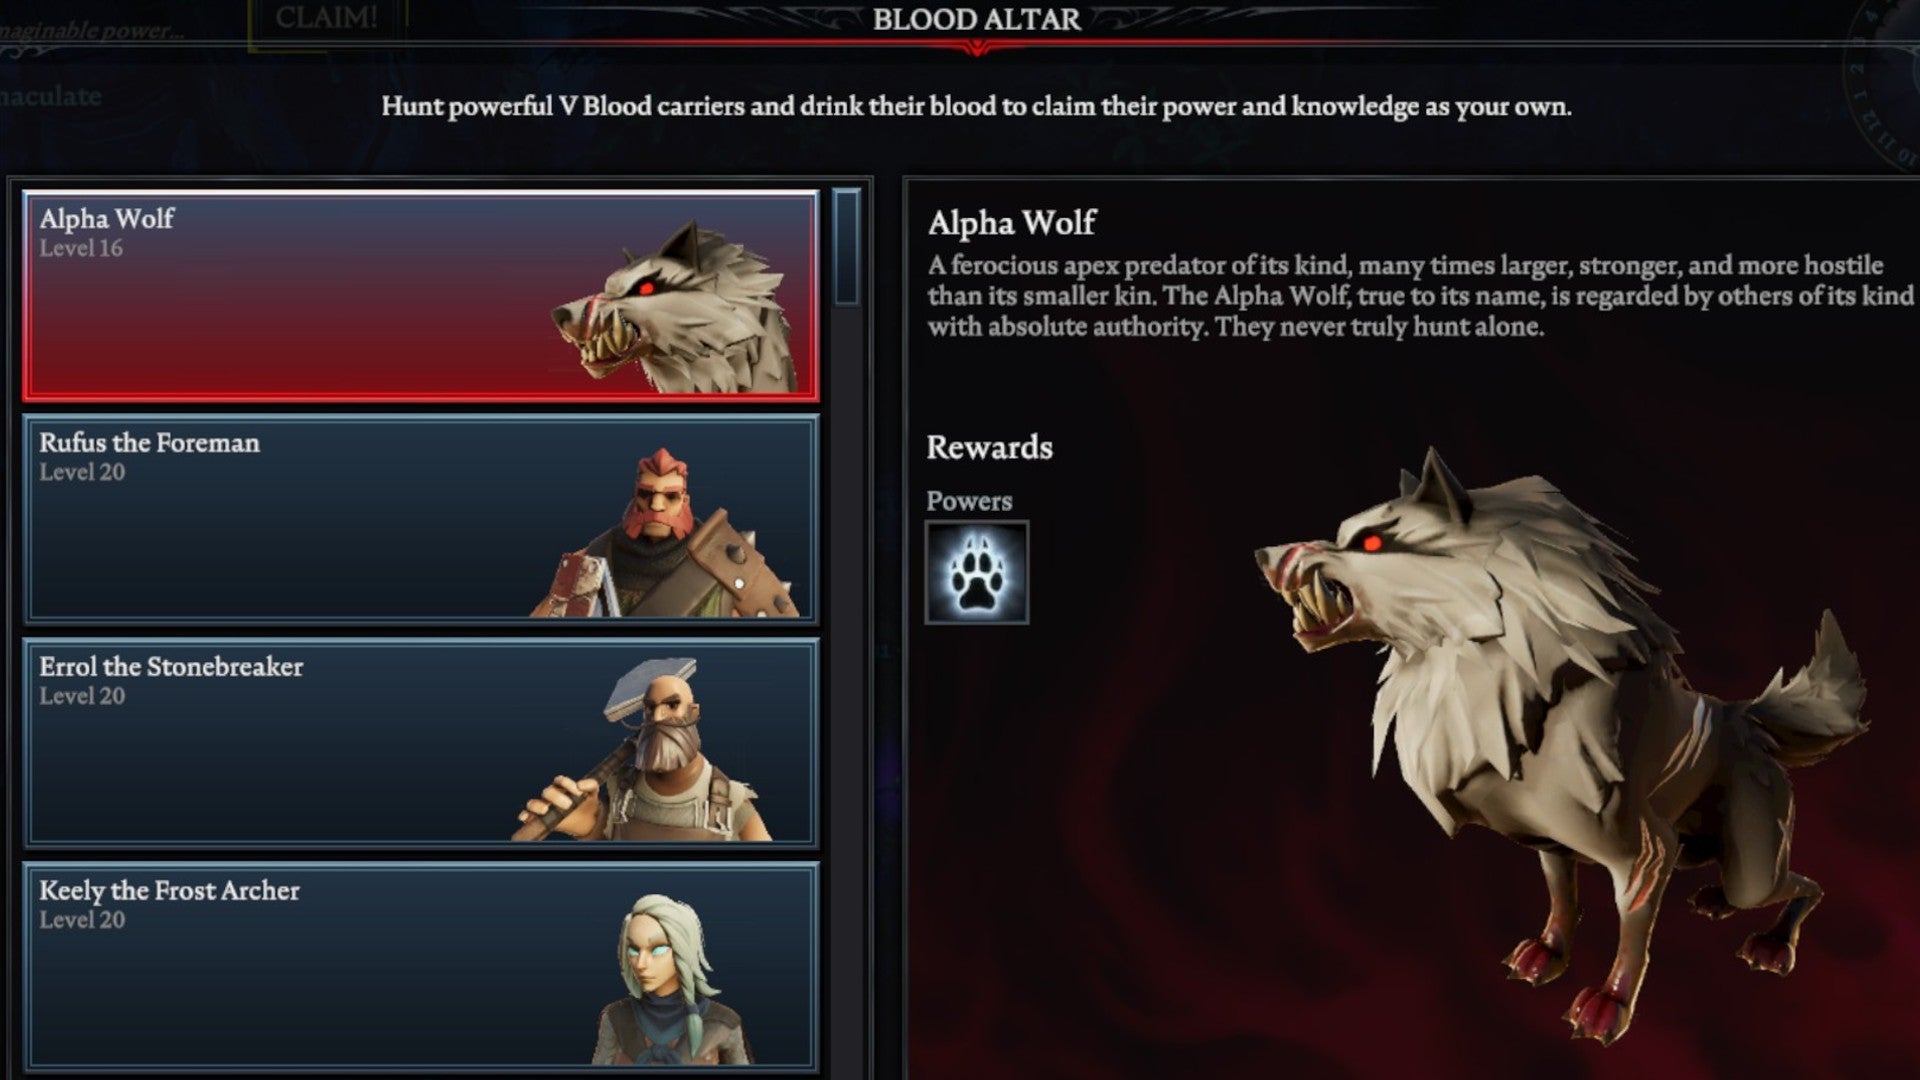 Halaman pelacakan V Rising Alpha Wolf Blood Altar, menampilkan gambar serigala alpha yang menggeram di sebelah kanan dan daftar bos di sebelah kiri